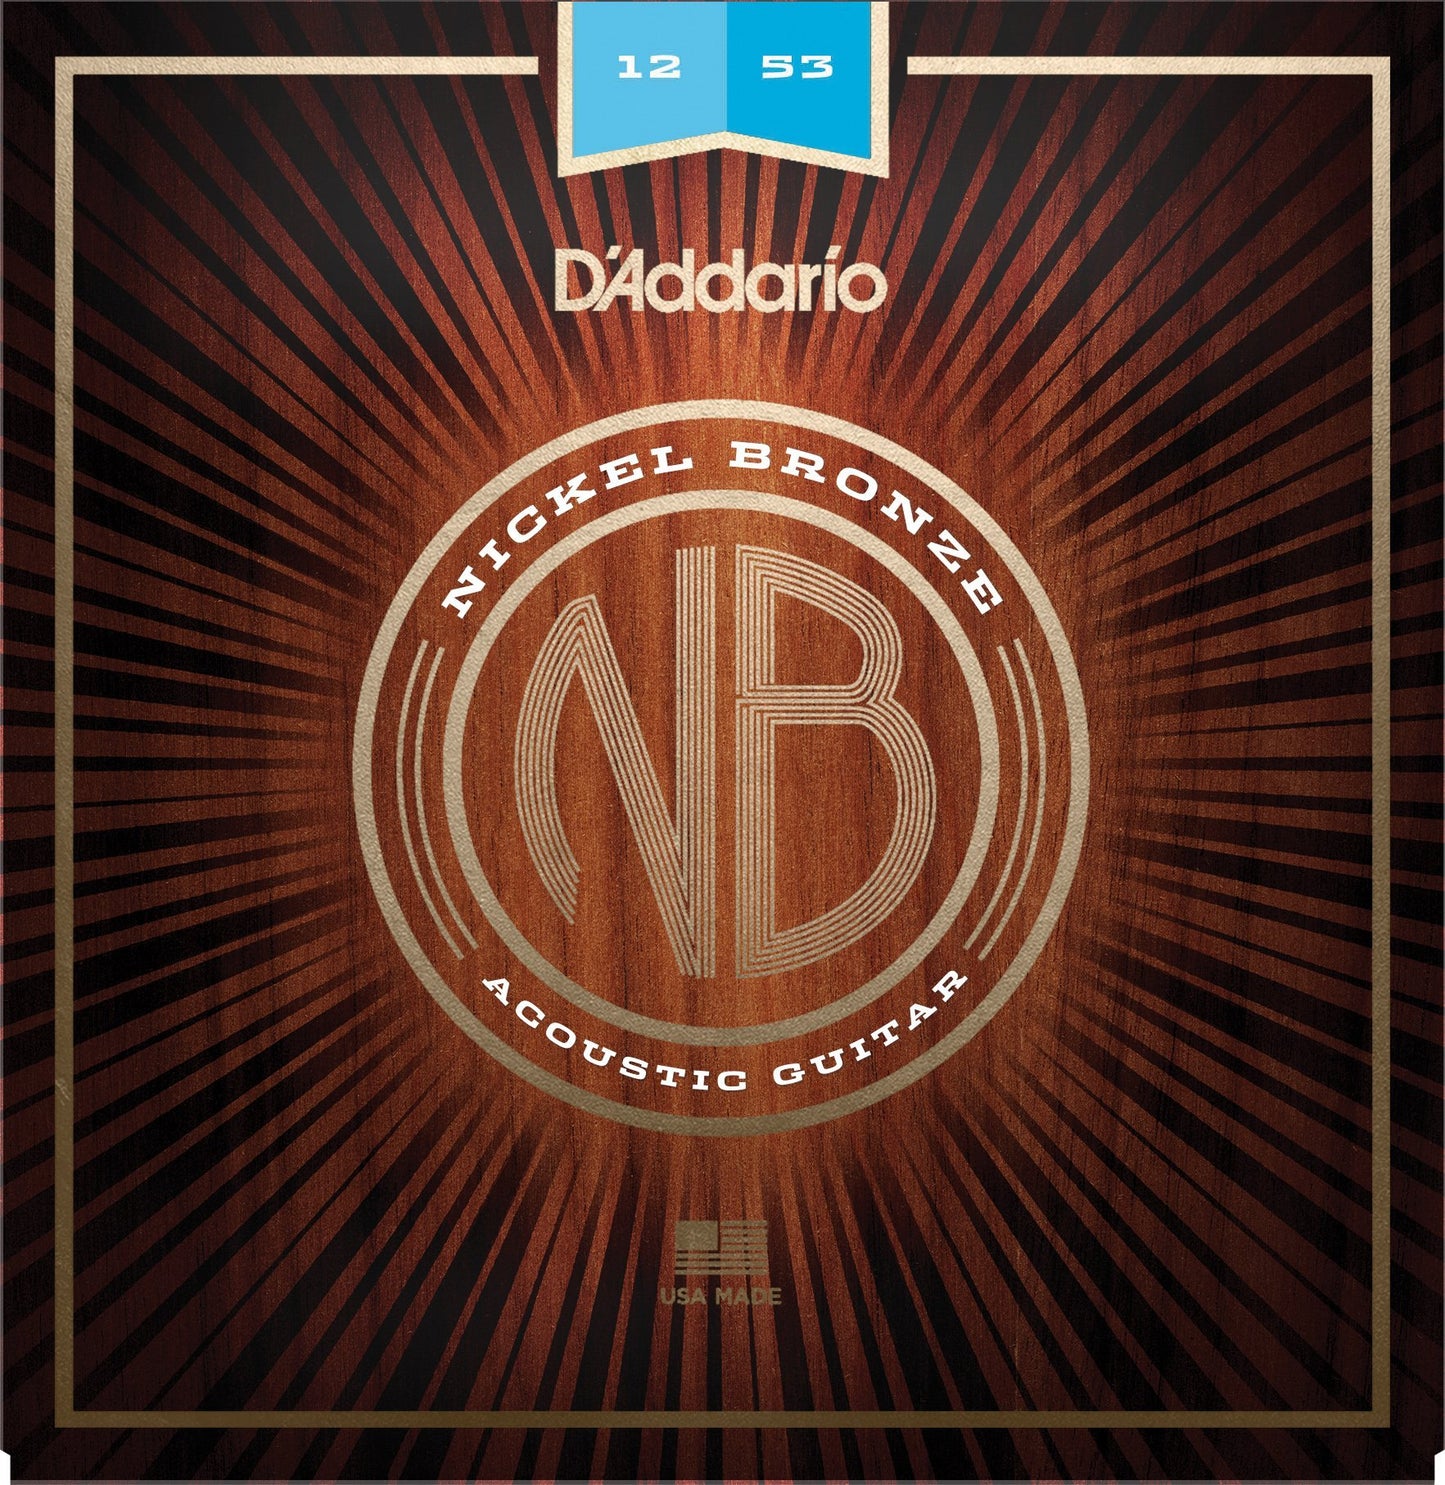 D'Addario NB1253 Nickel Bronze Acoustic Guitar Strings, Light, 12-53 Accessories_Strings D'Addario   